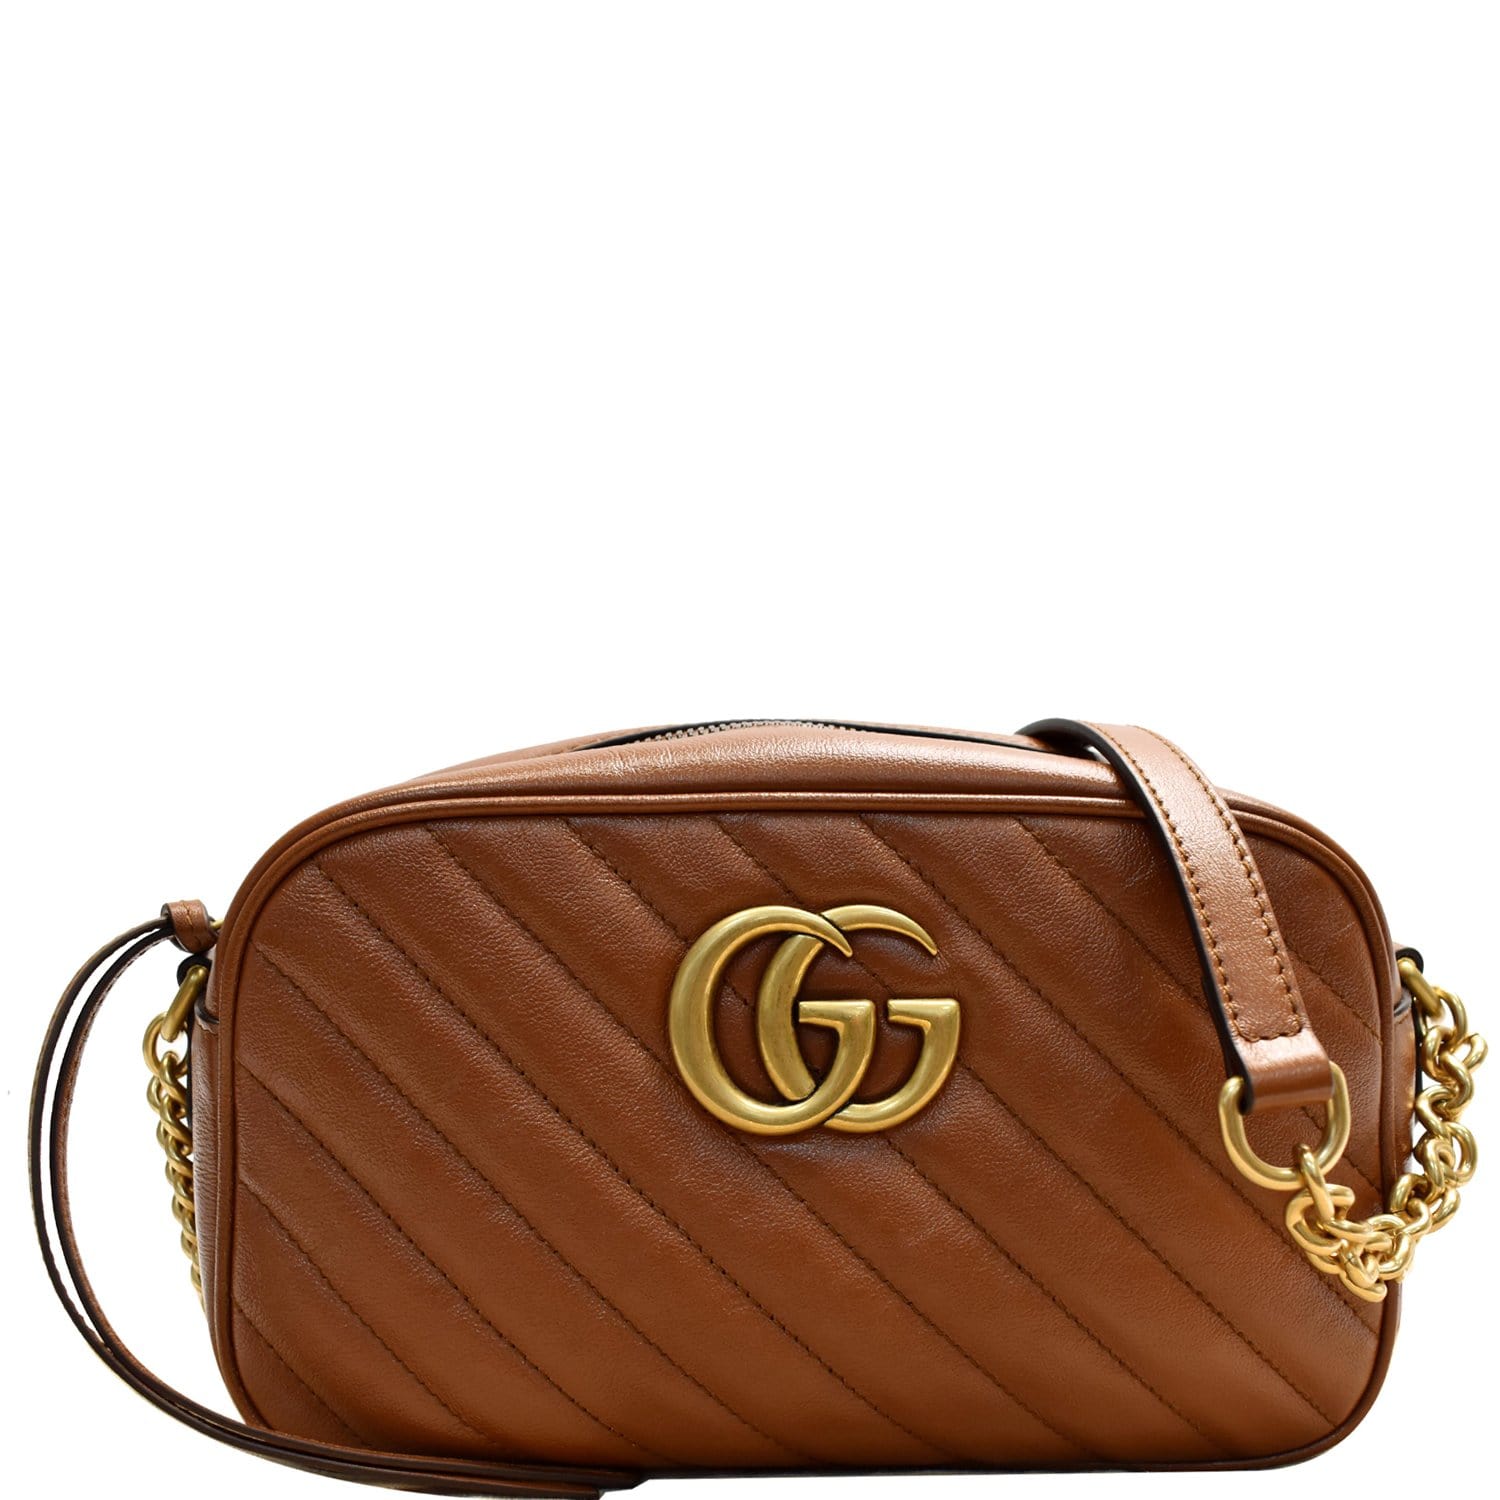 GG small matelassé leather shoulder bag